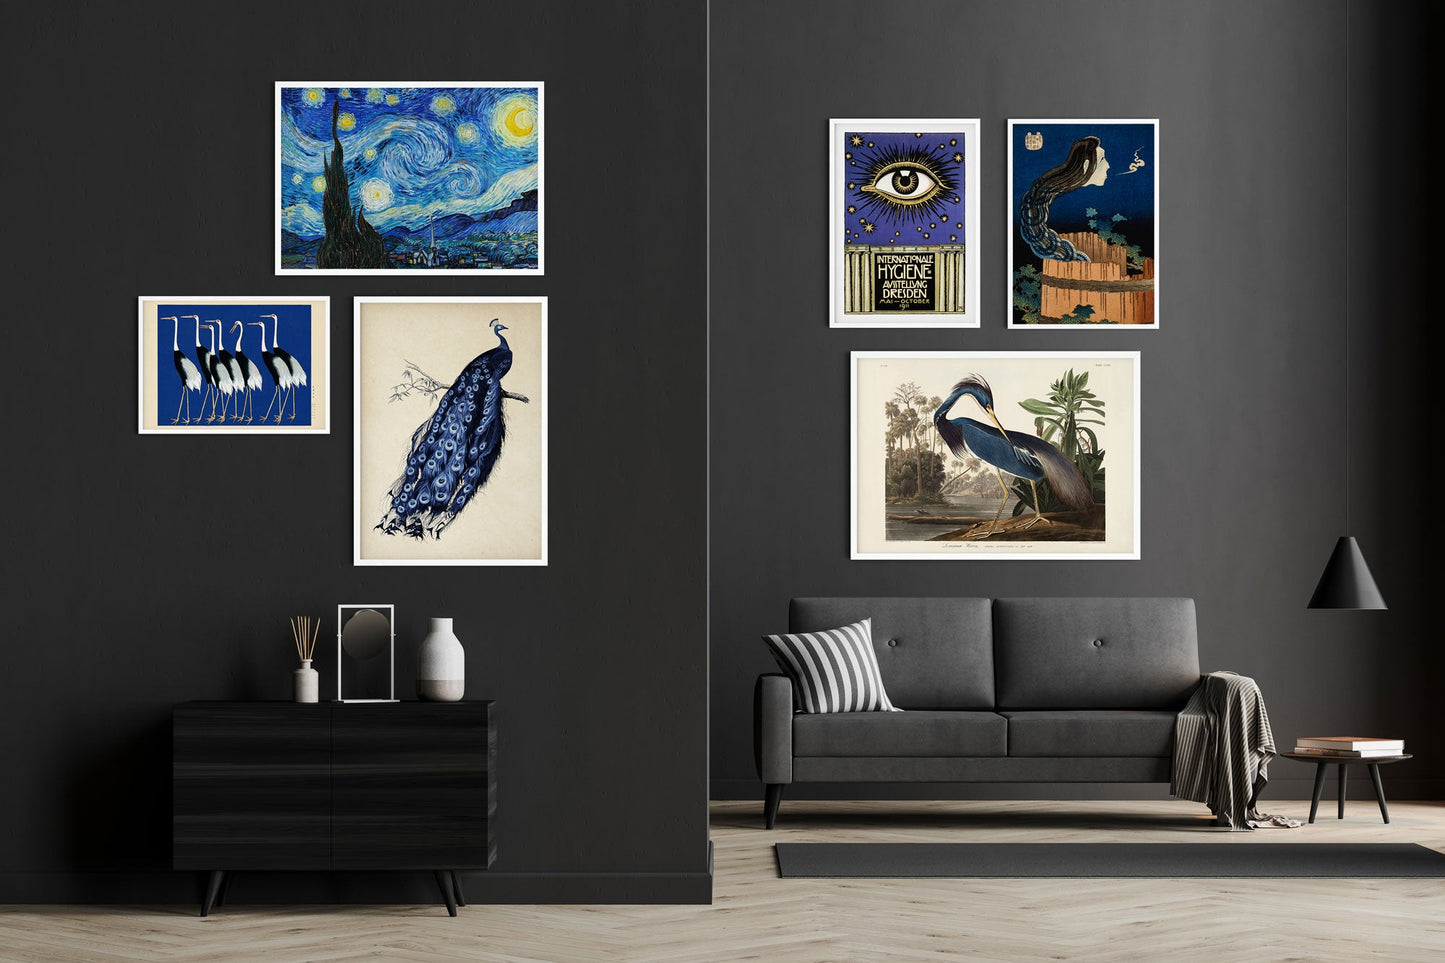 Blue Gallery Wall (Set of 6 Art Prints)